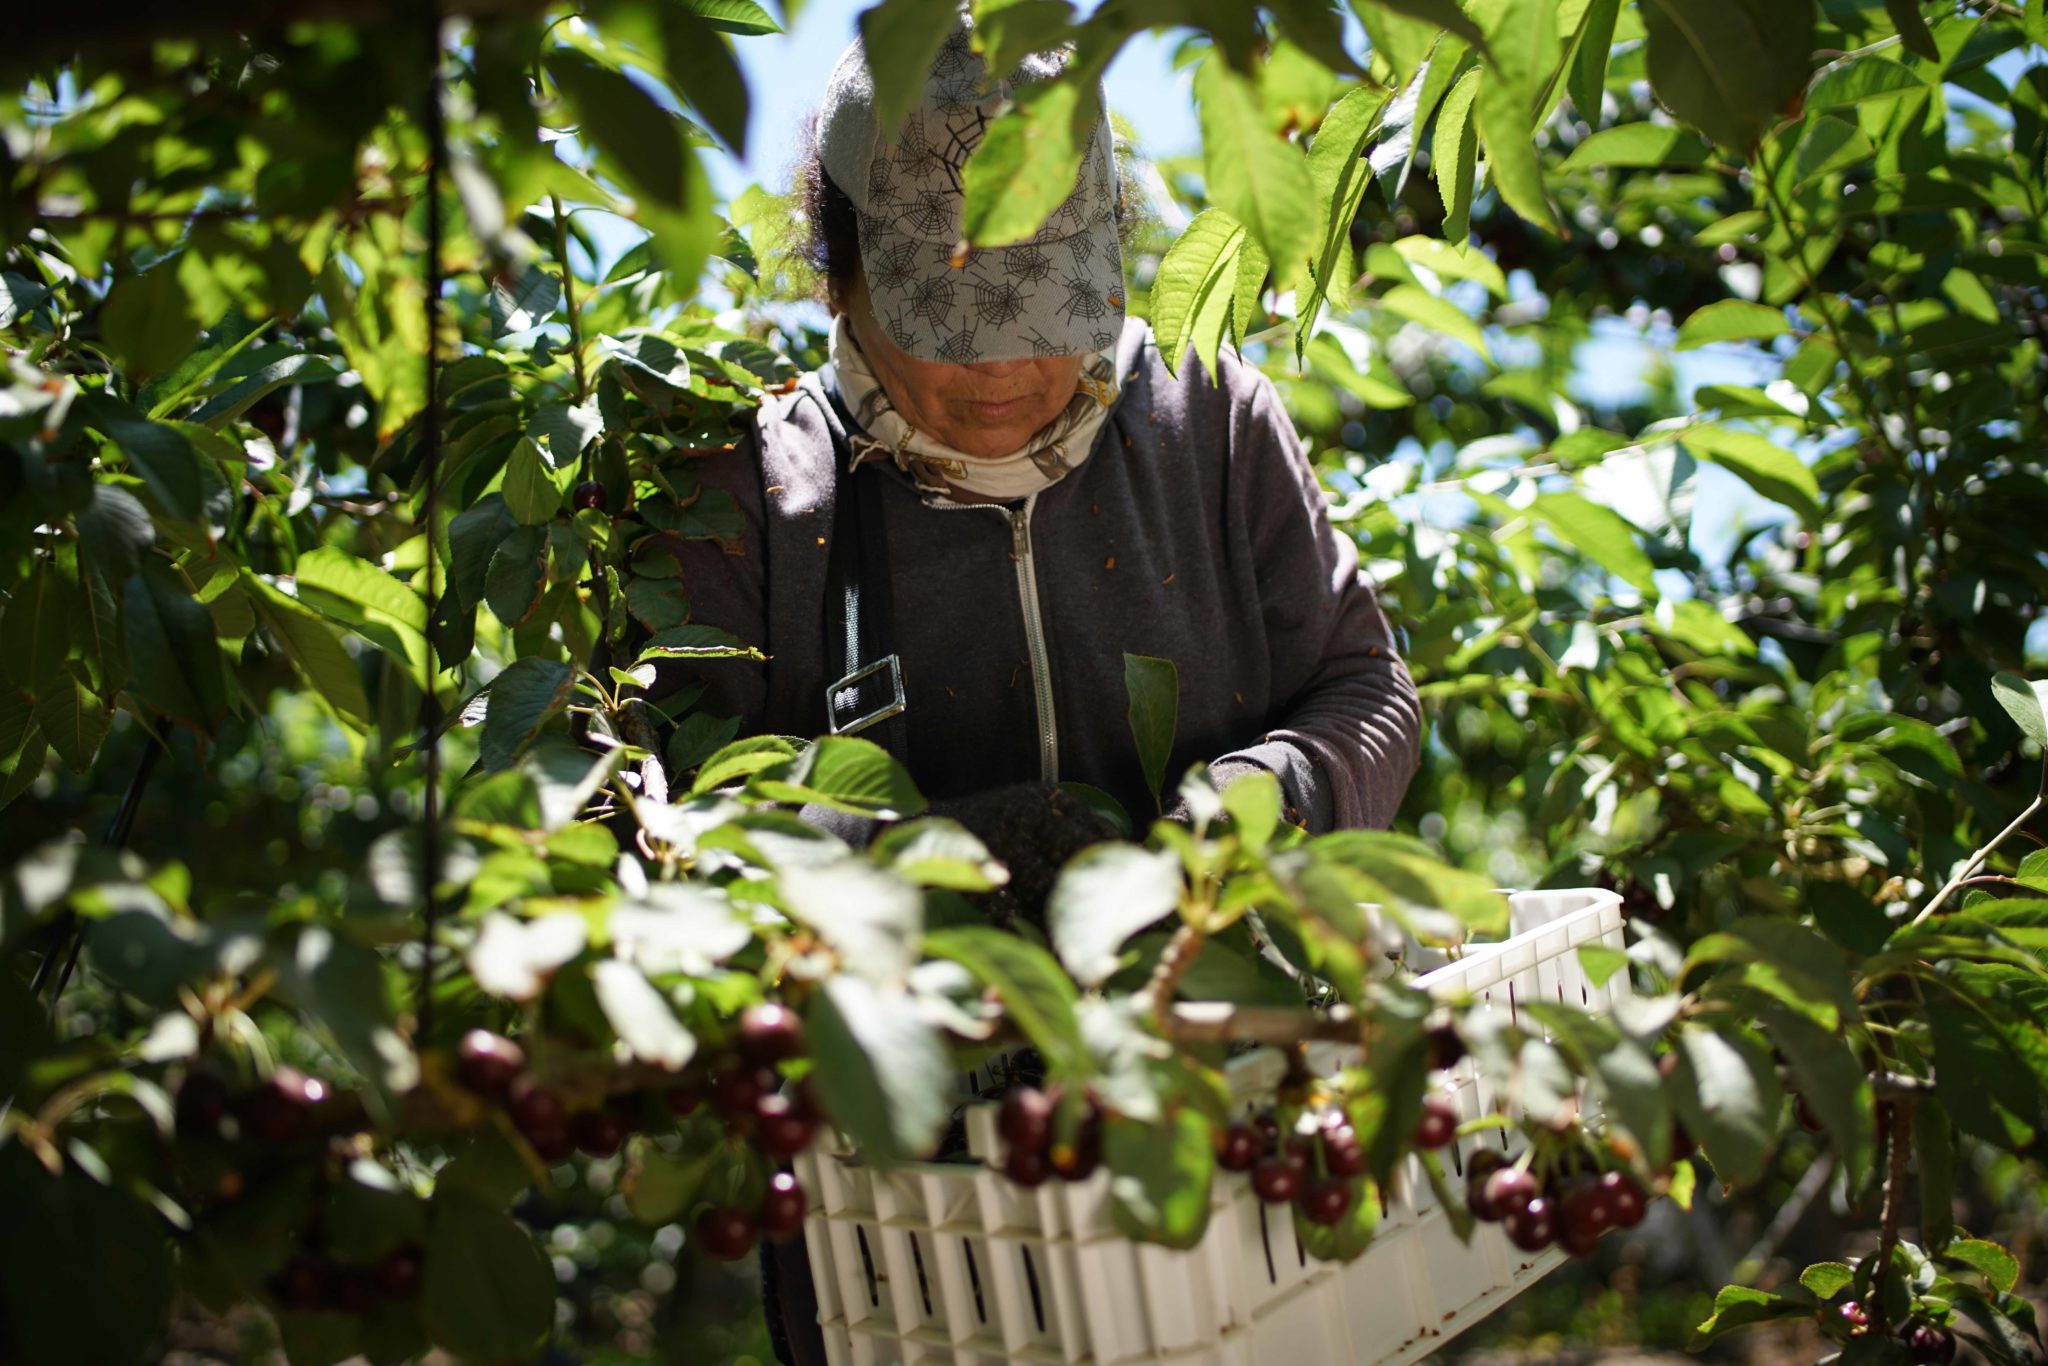 person harvesting cherries